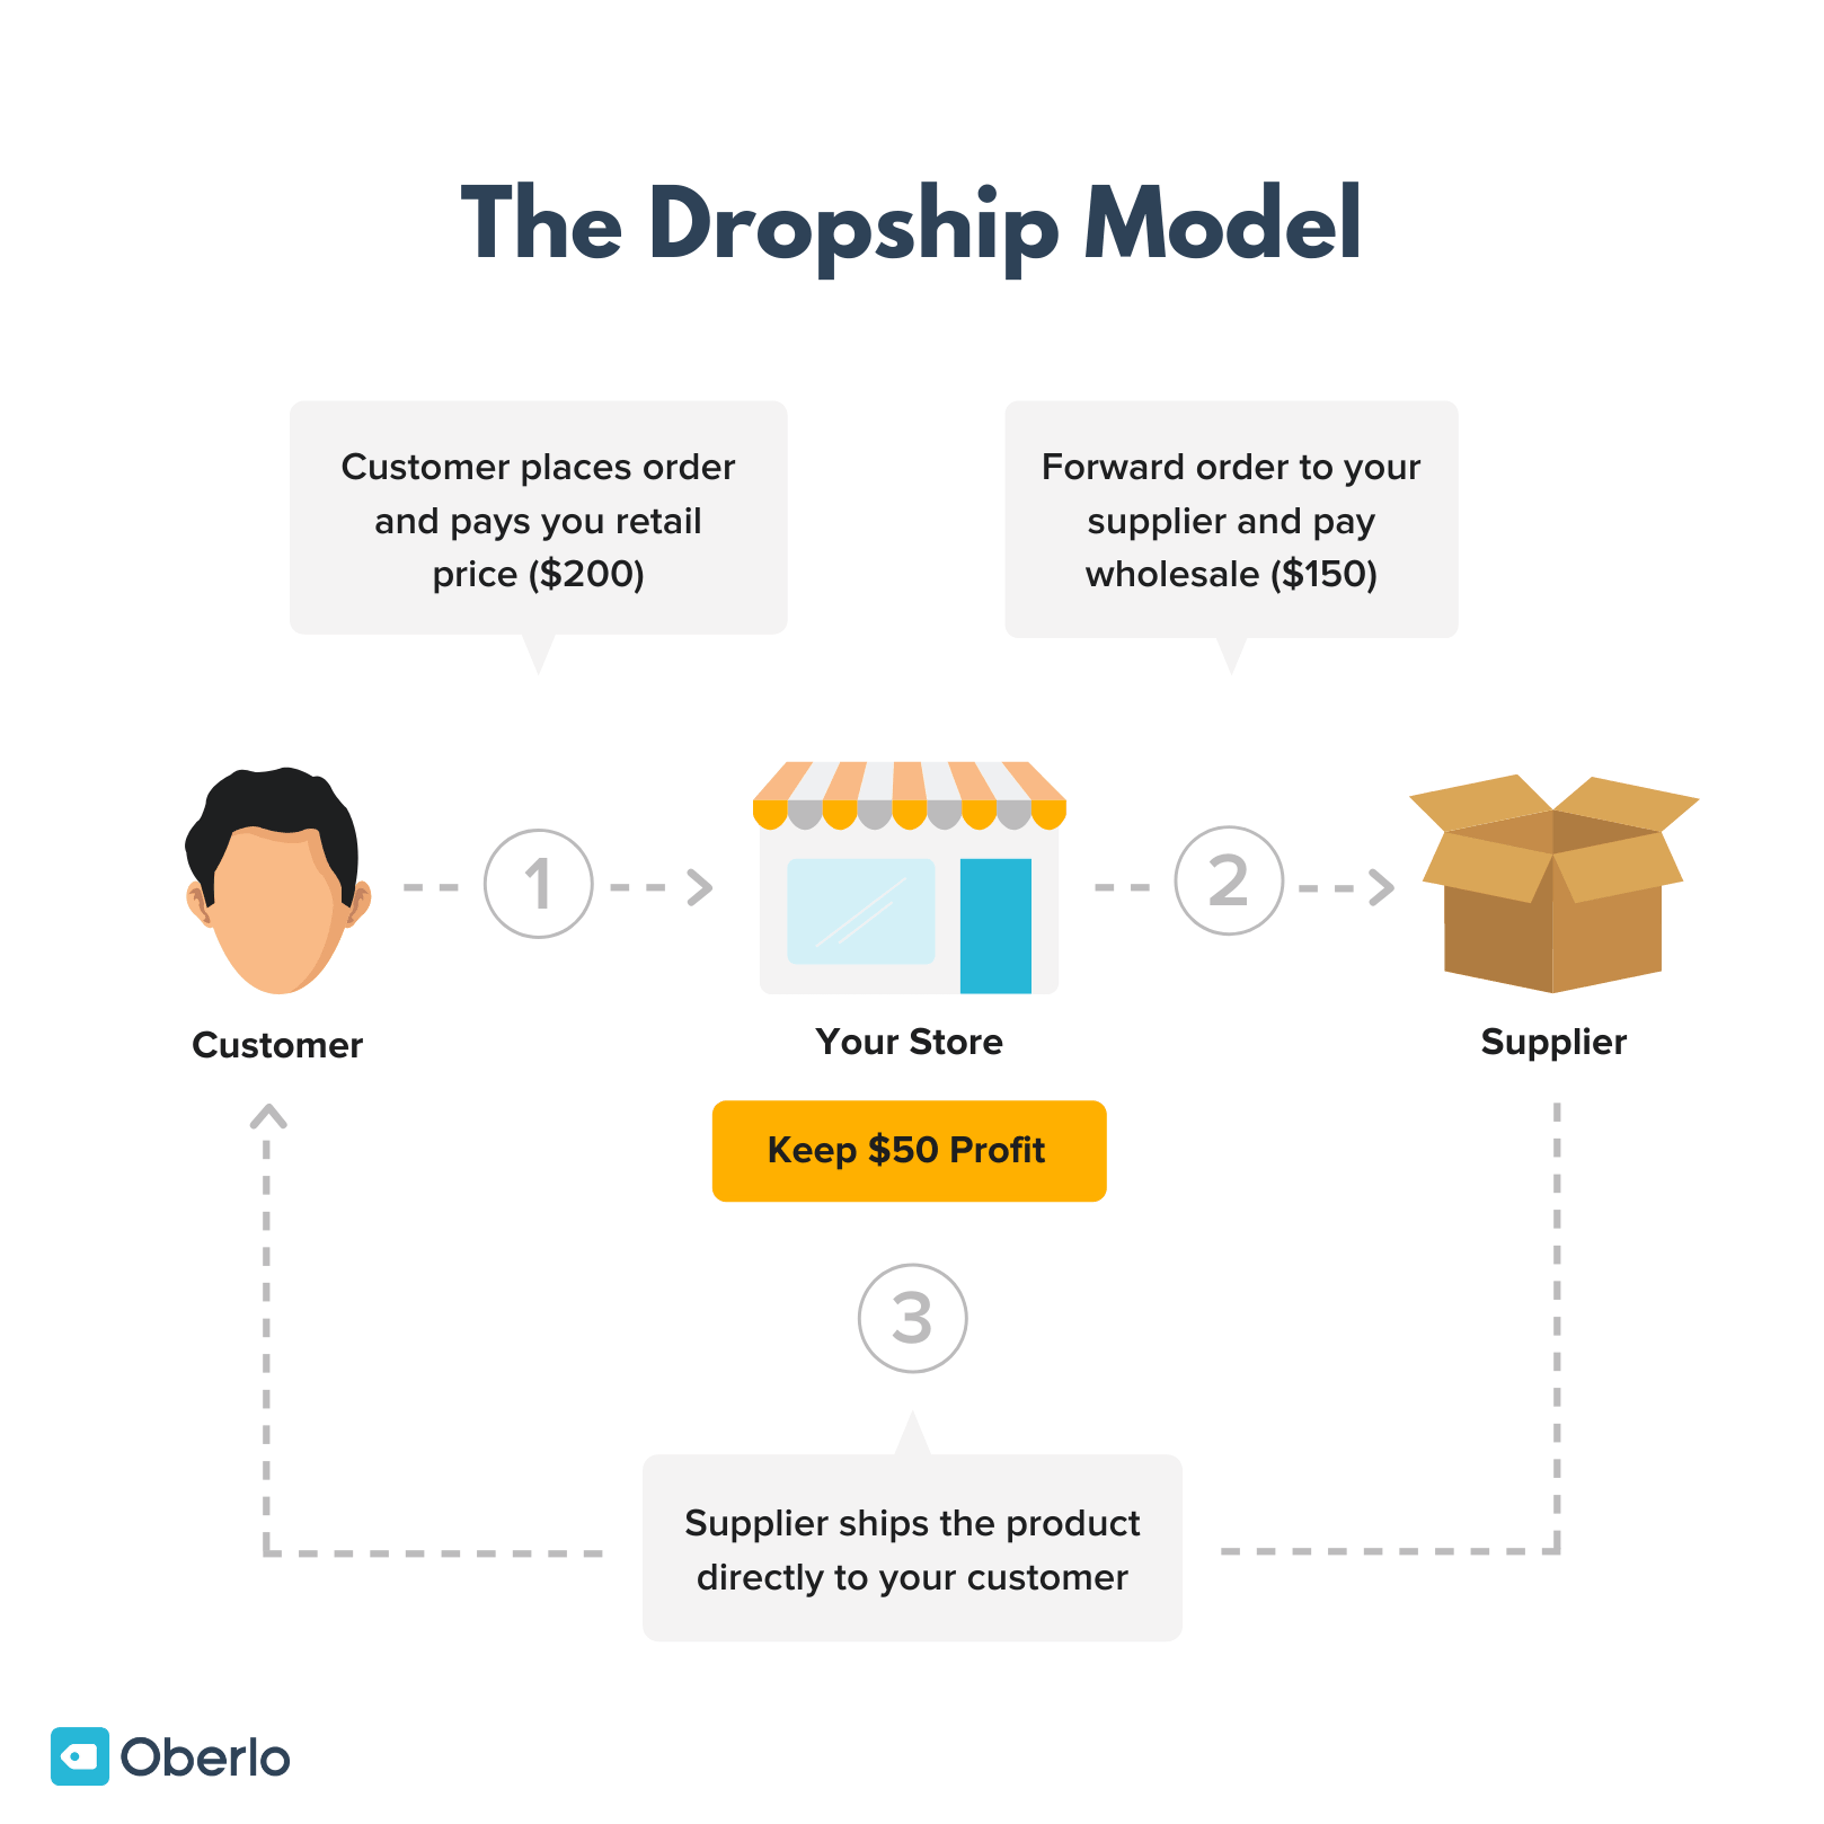 The dropship model diagram.